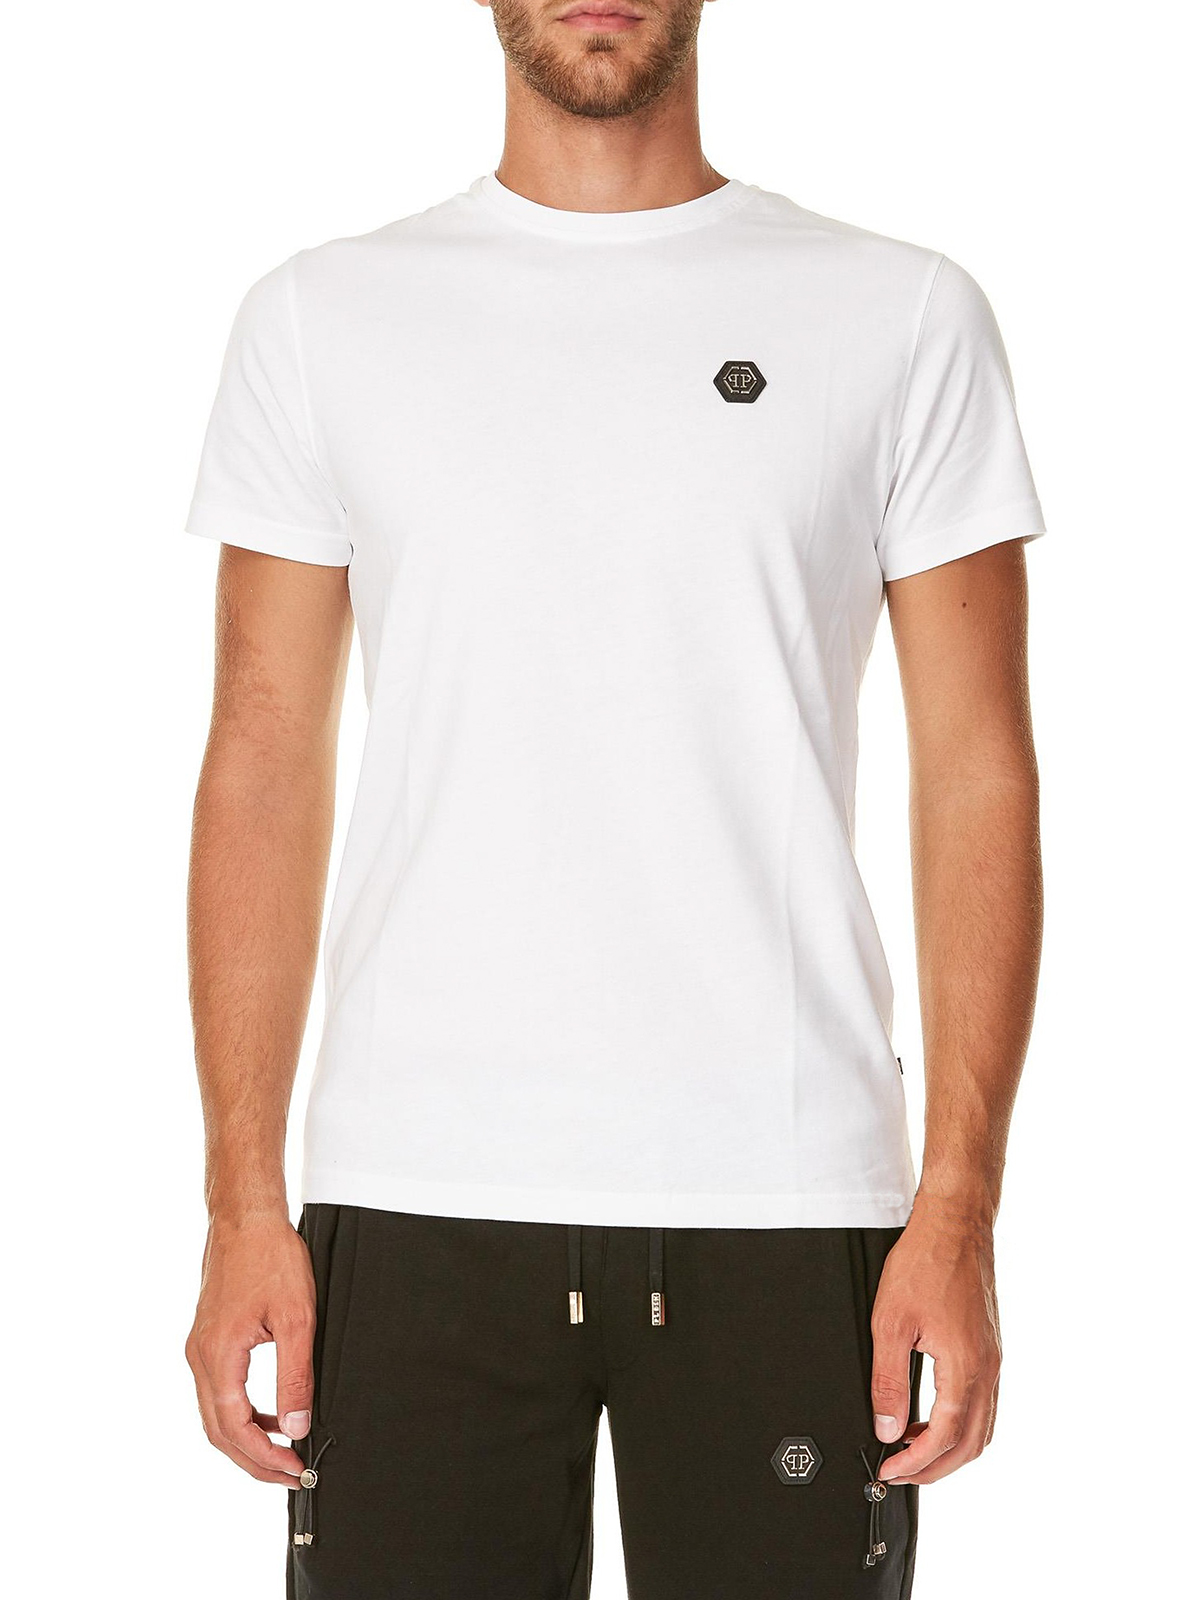 Mantel Puur Storen T-shirts Philipp Plein - Original cotton jersey T-shirt - MTK2557PJY002N01